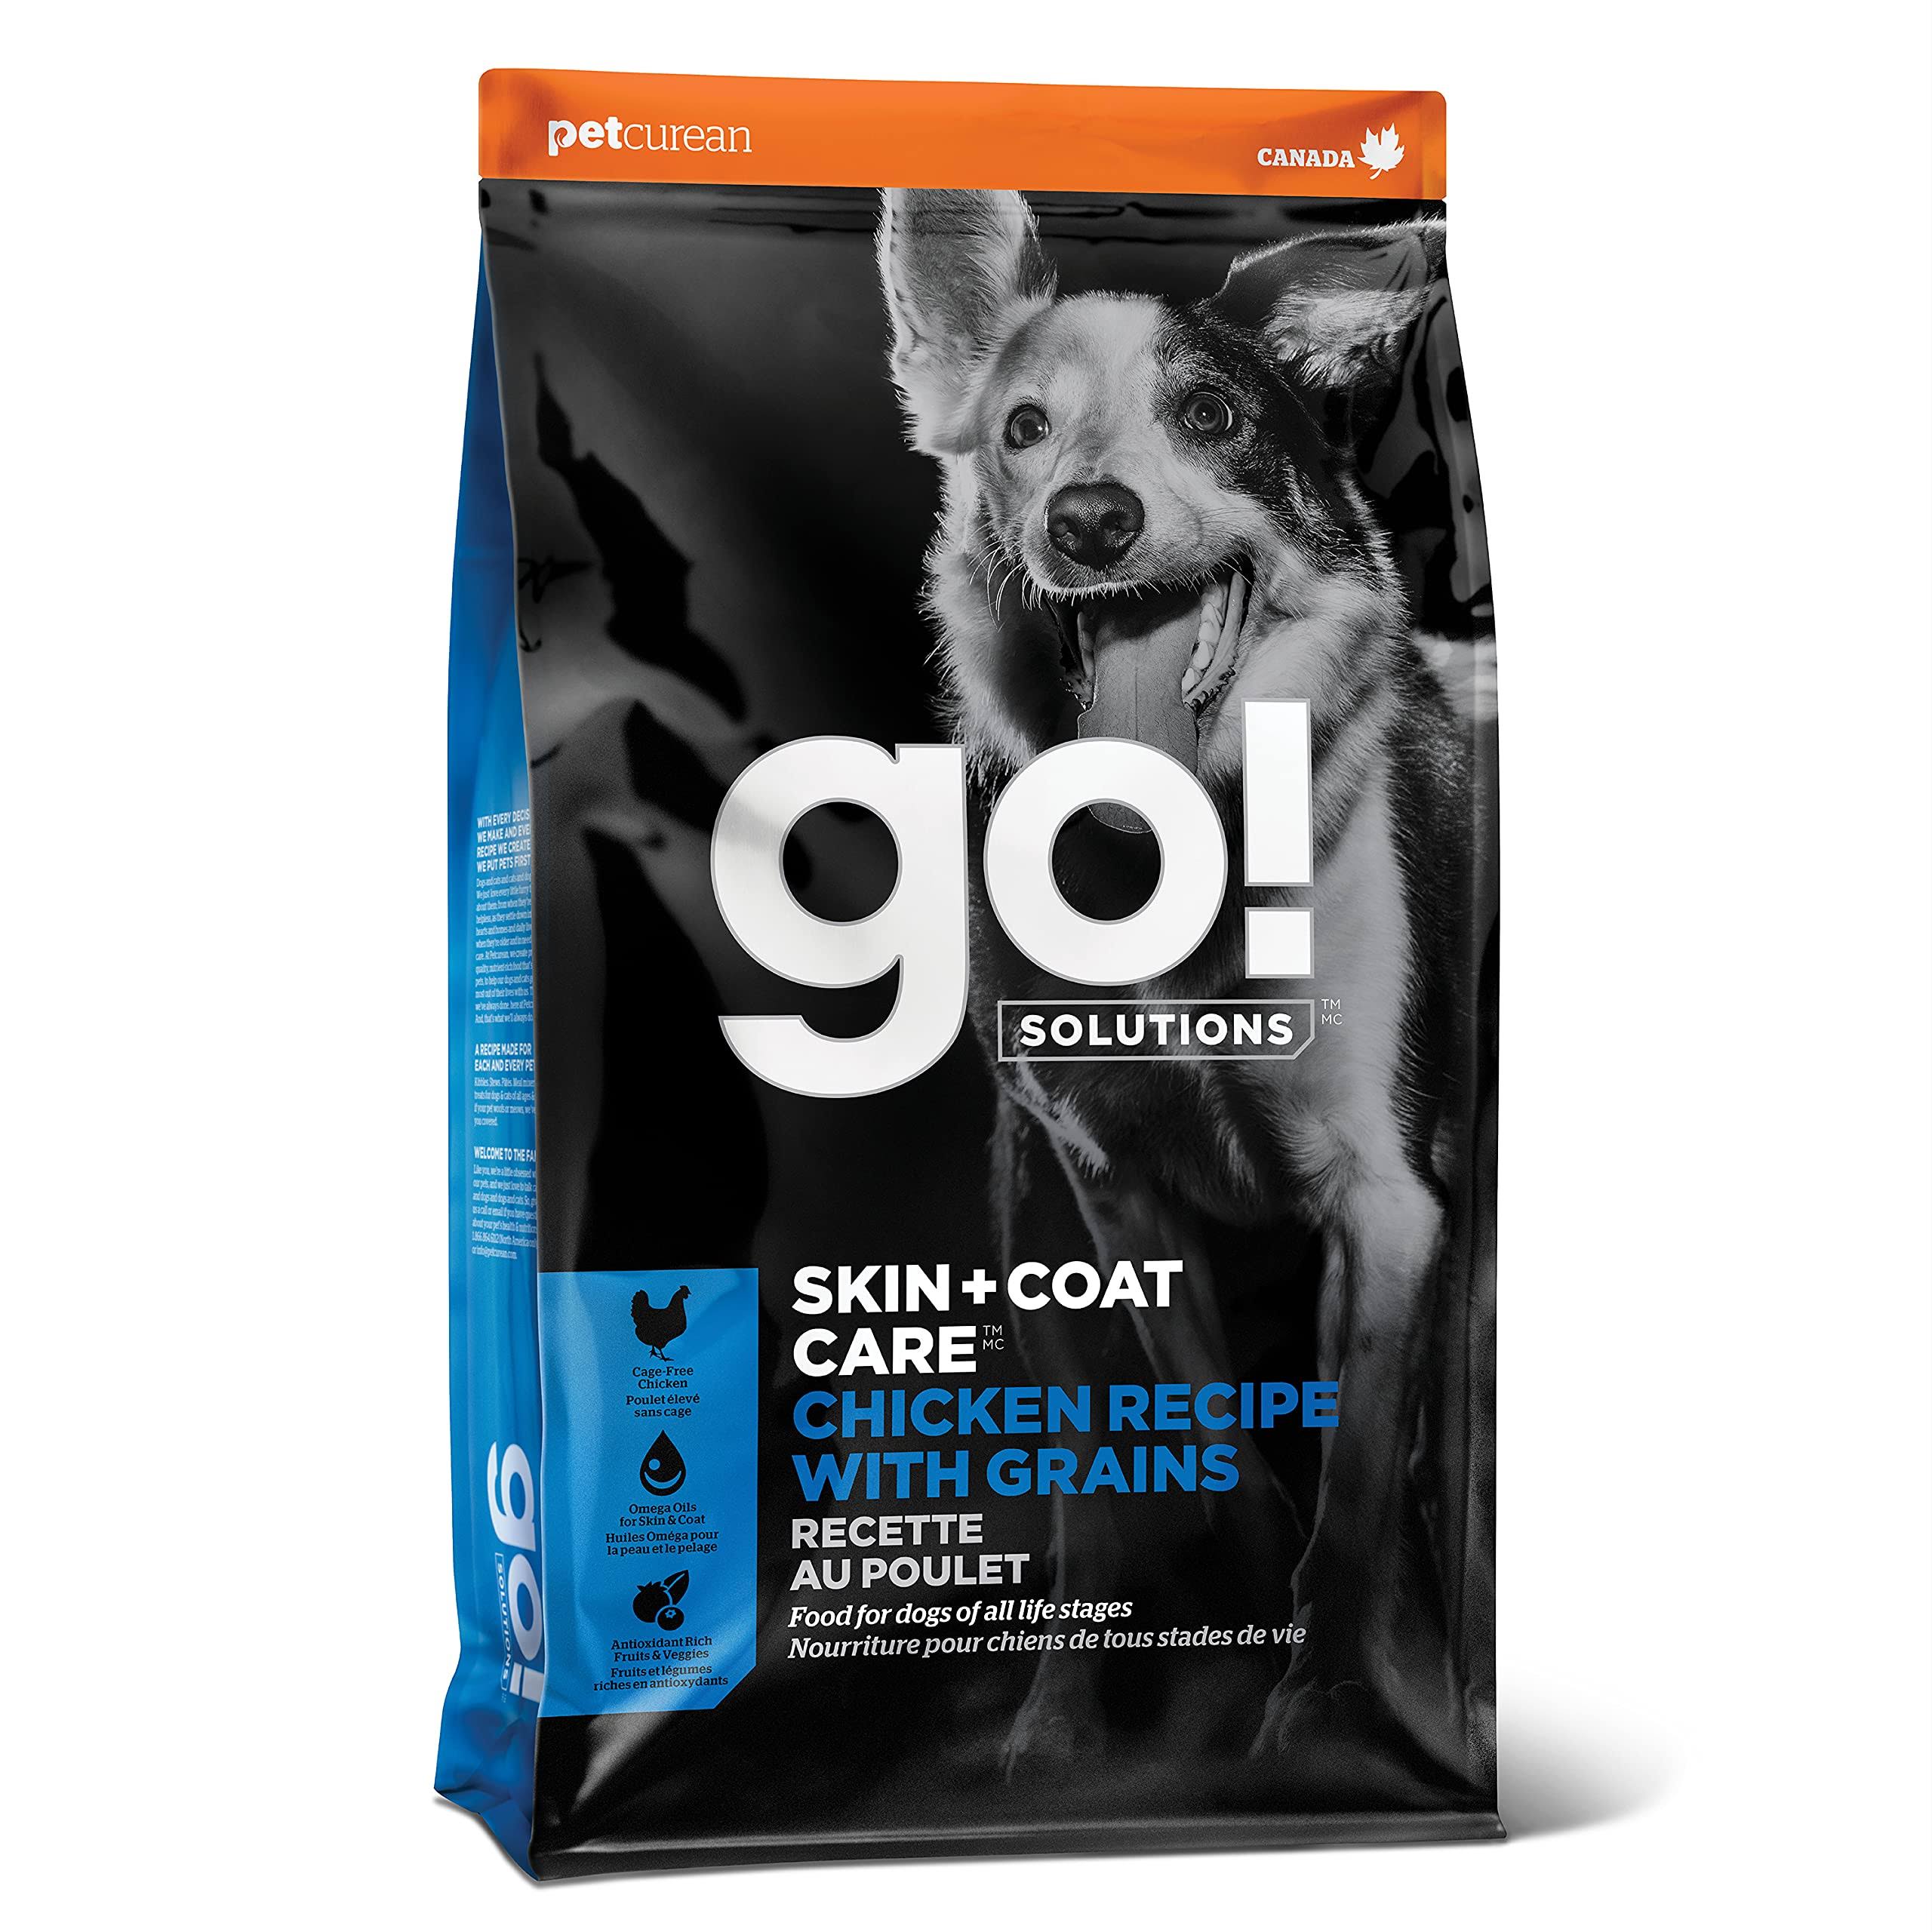 Go! Solutions Skin + Coat Care - Dry Dog Food, 3.5 LB - Chicken Recip